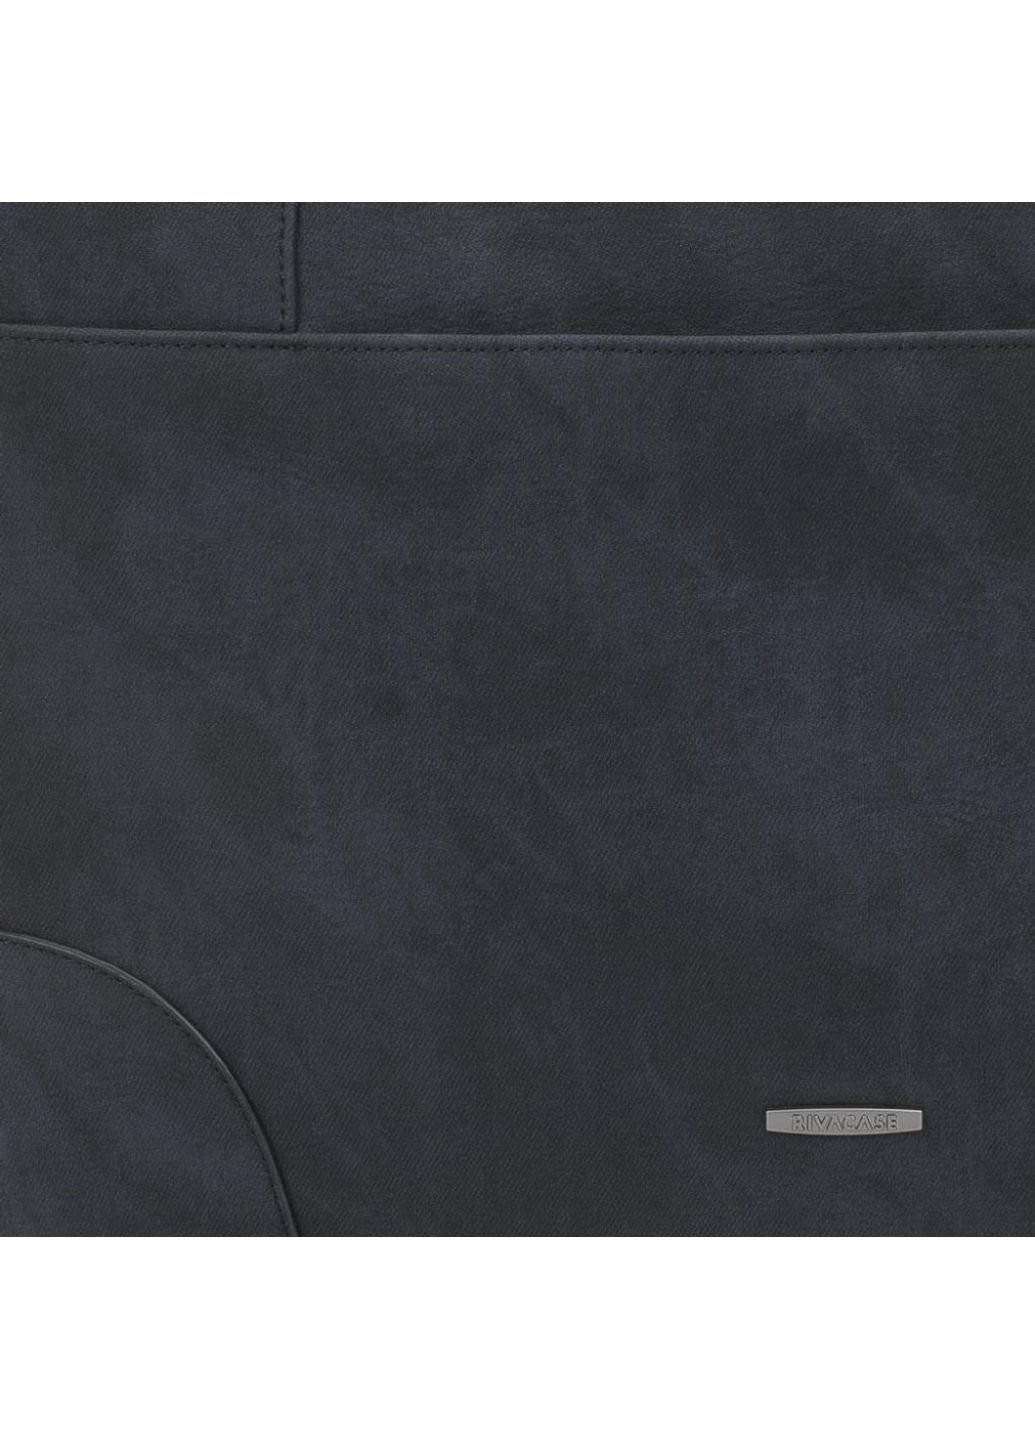 Чехол для ноутбука 15.6" 8905 Black (8905Black) RIVACASE (251883992)